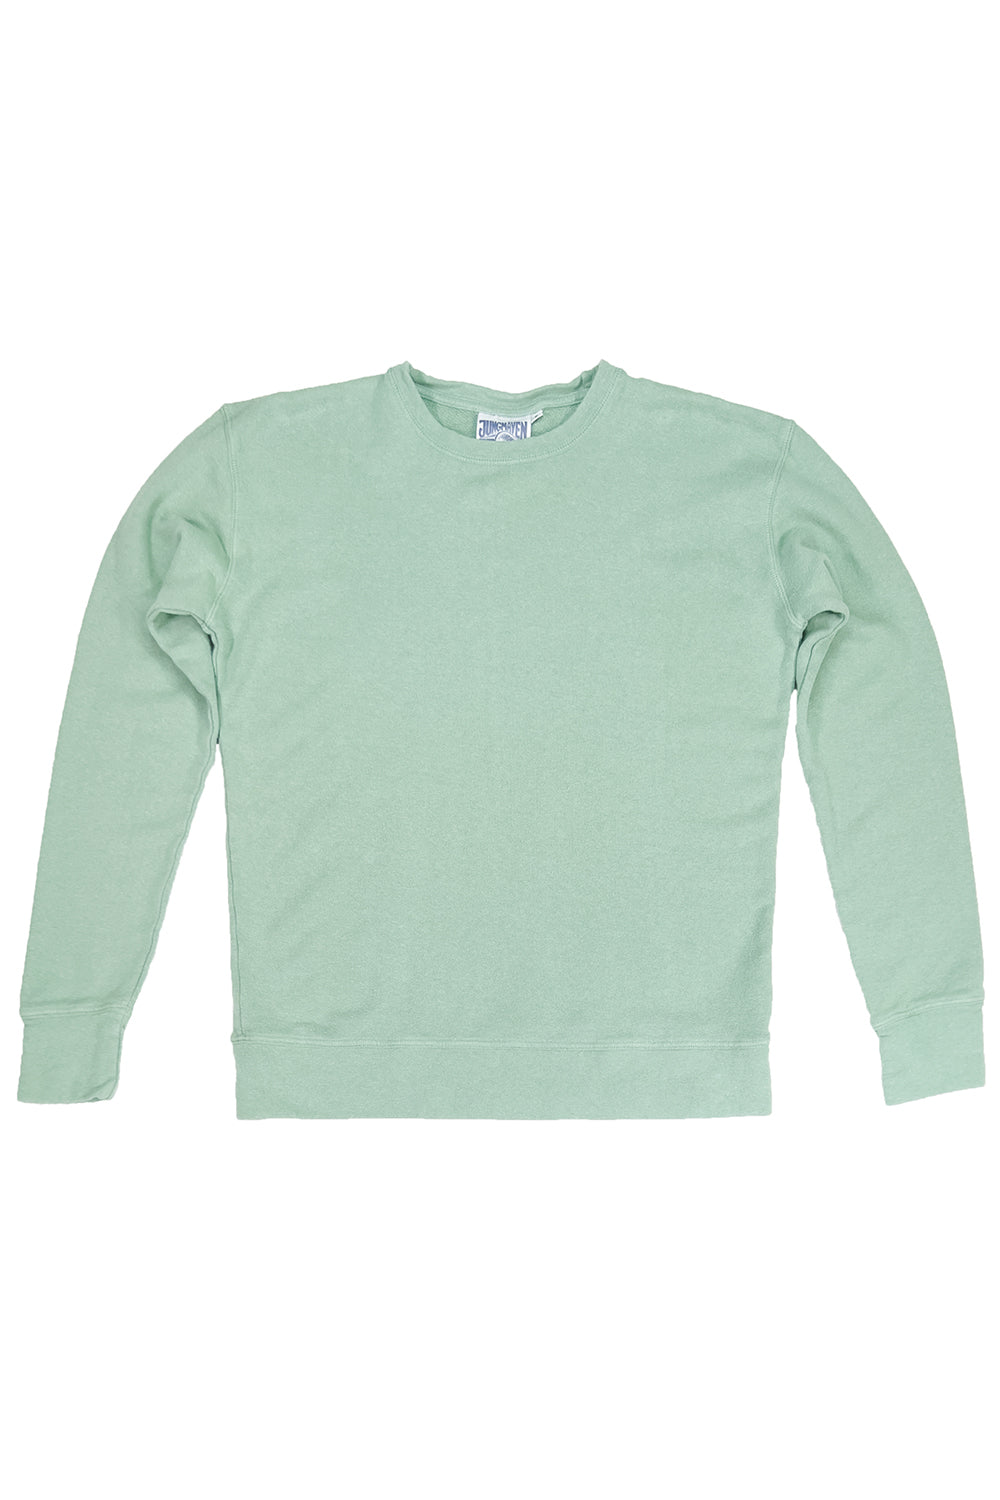 Hemp Clothing Sweatshirt | Tahoe Jungmaven